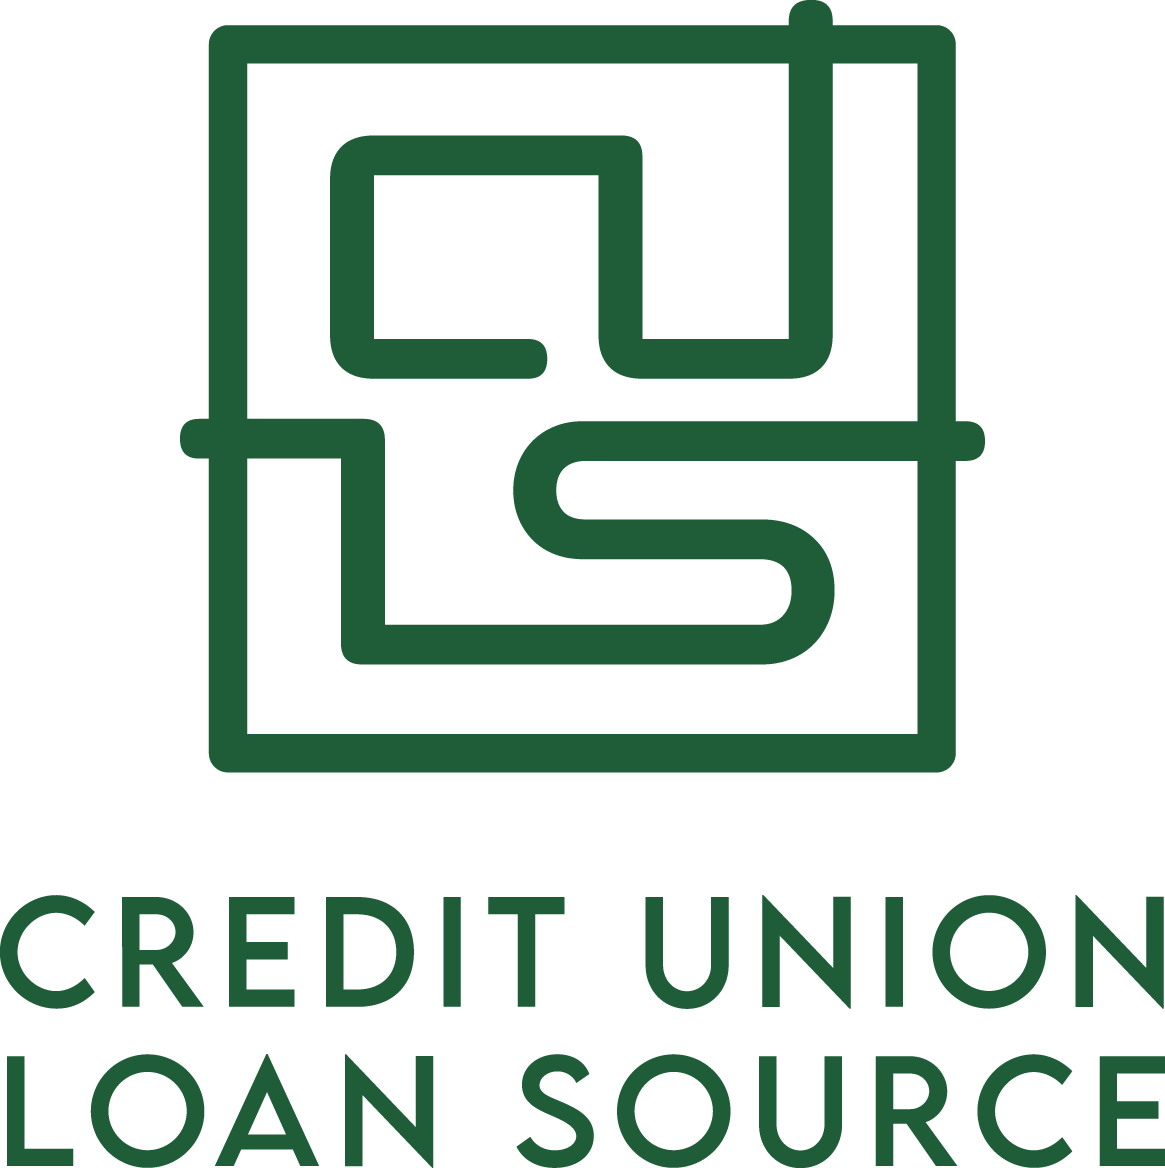 Credit Union Loan Source